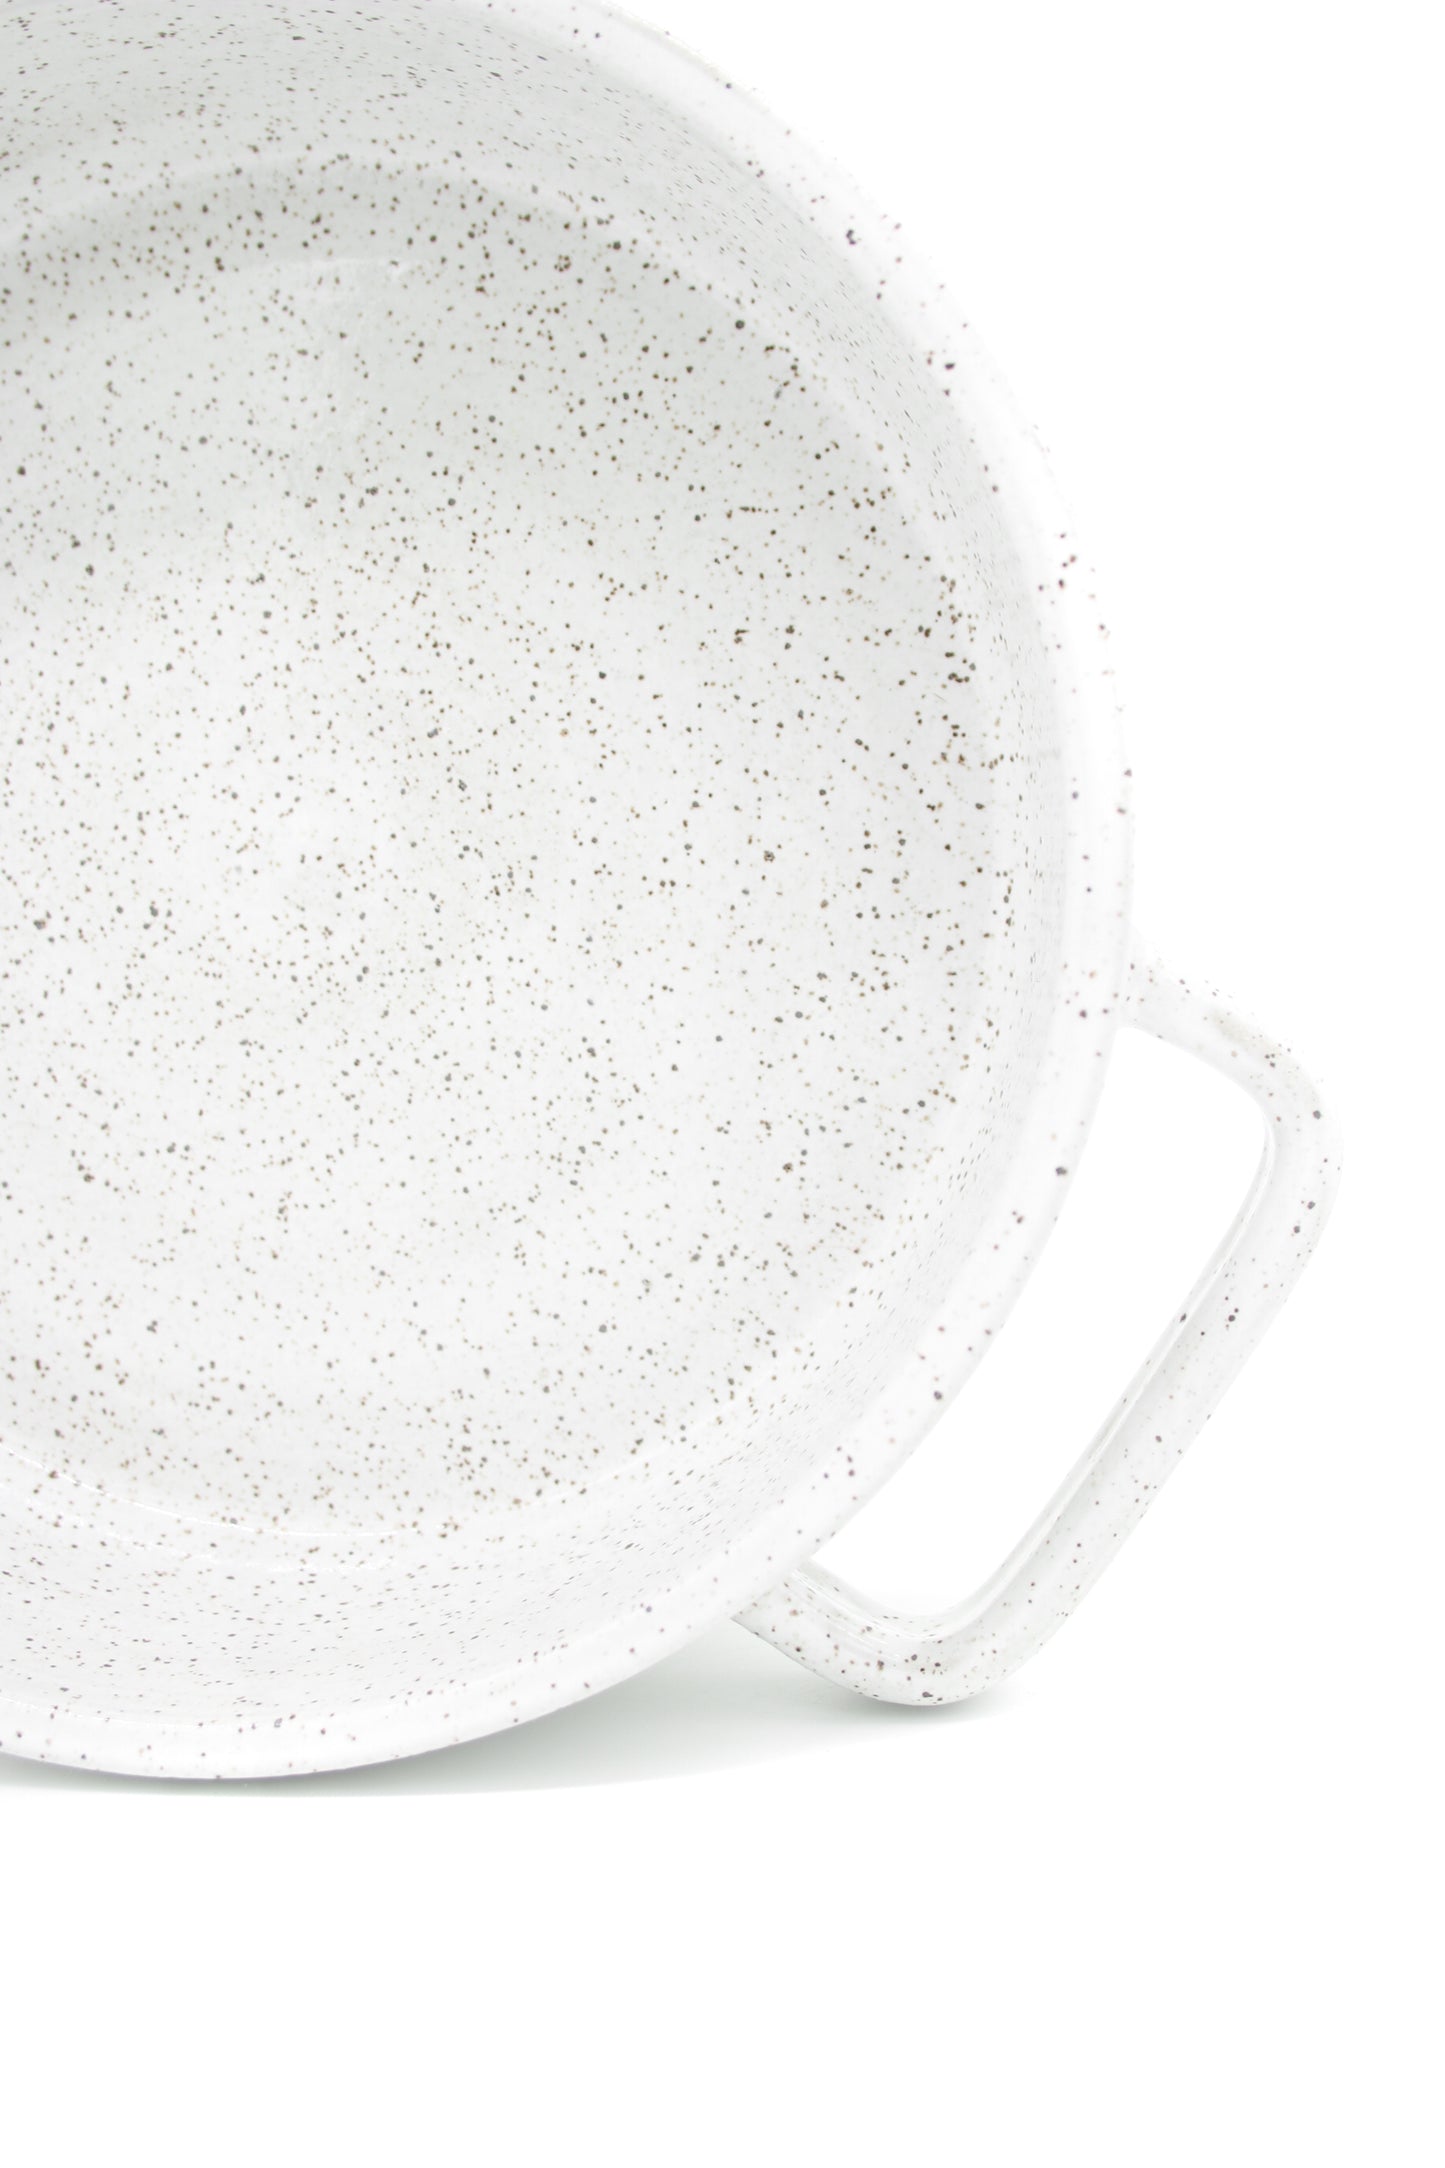 Speckled Buff Glossy White Bakeware Pans - Handmade Stoneware Kitchenware